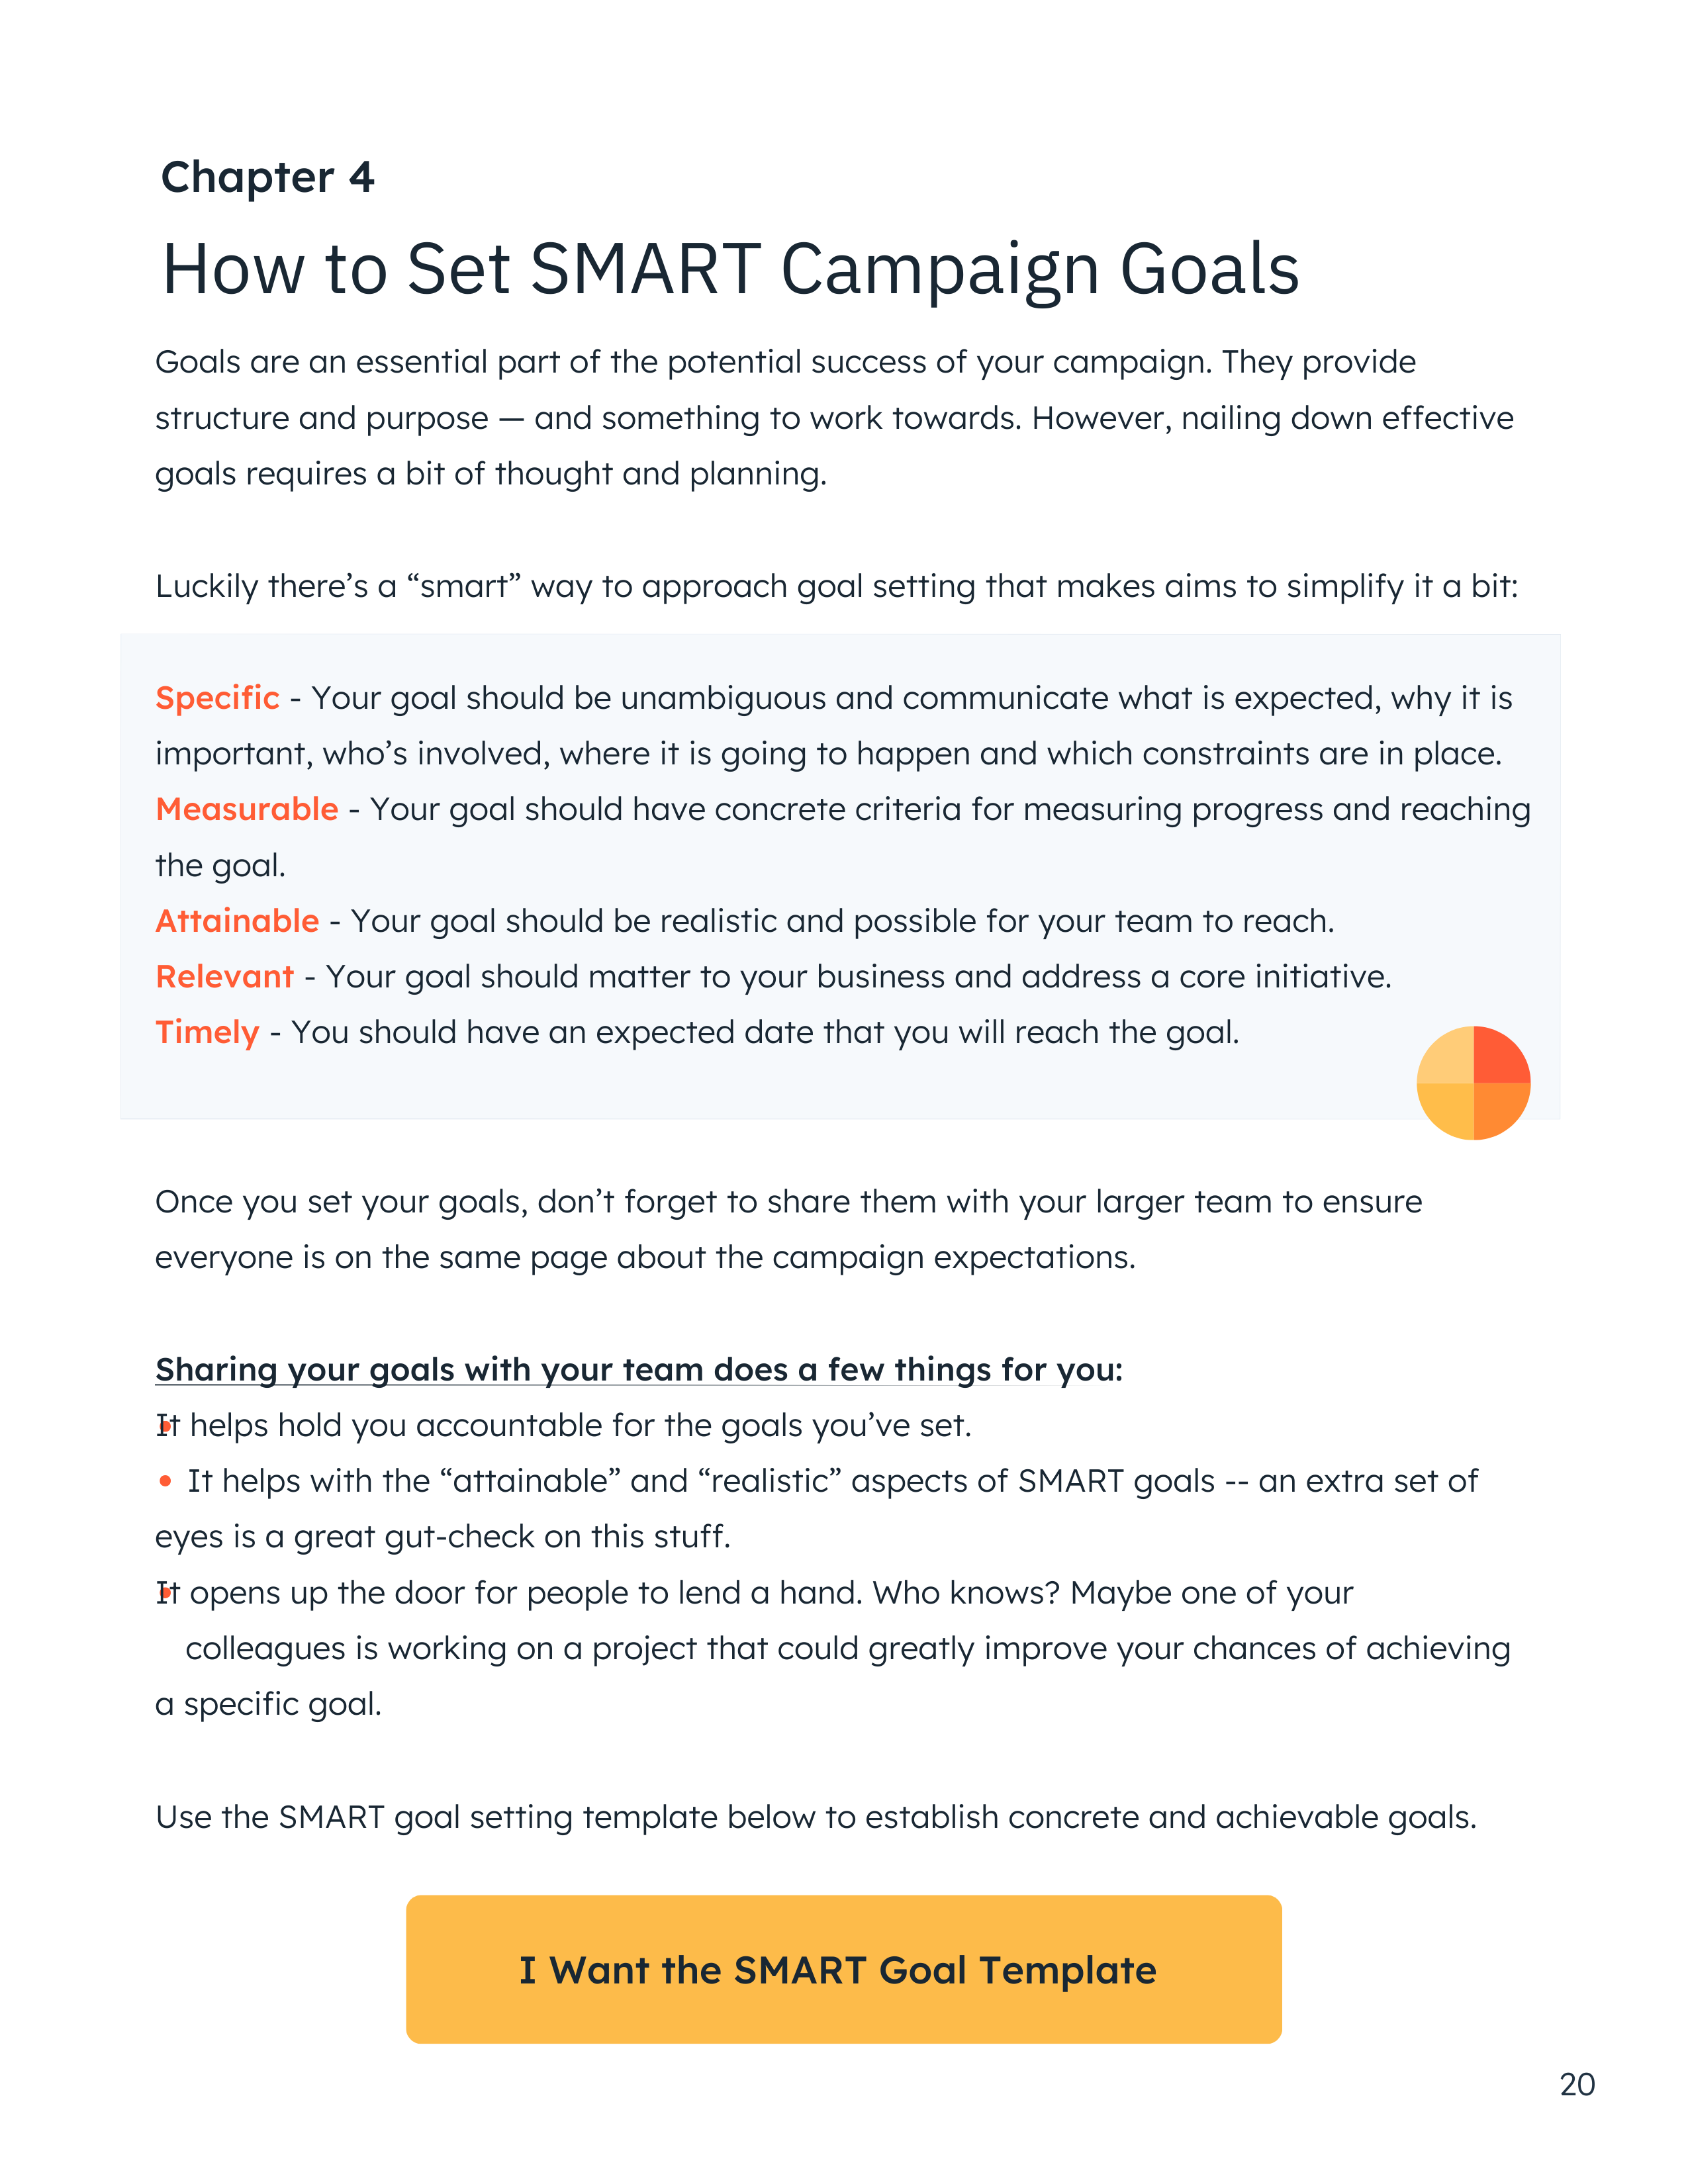 smart-campaign-goals-content